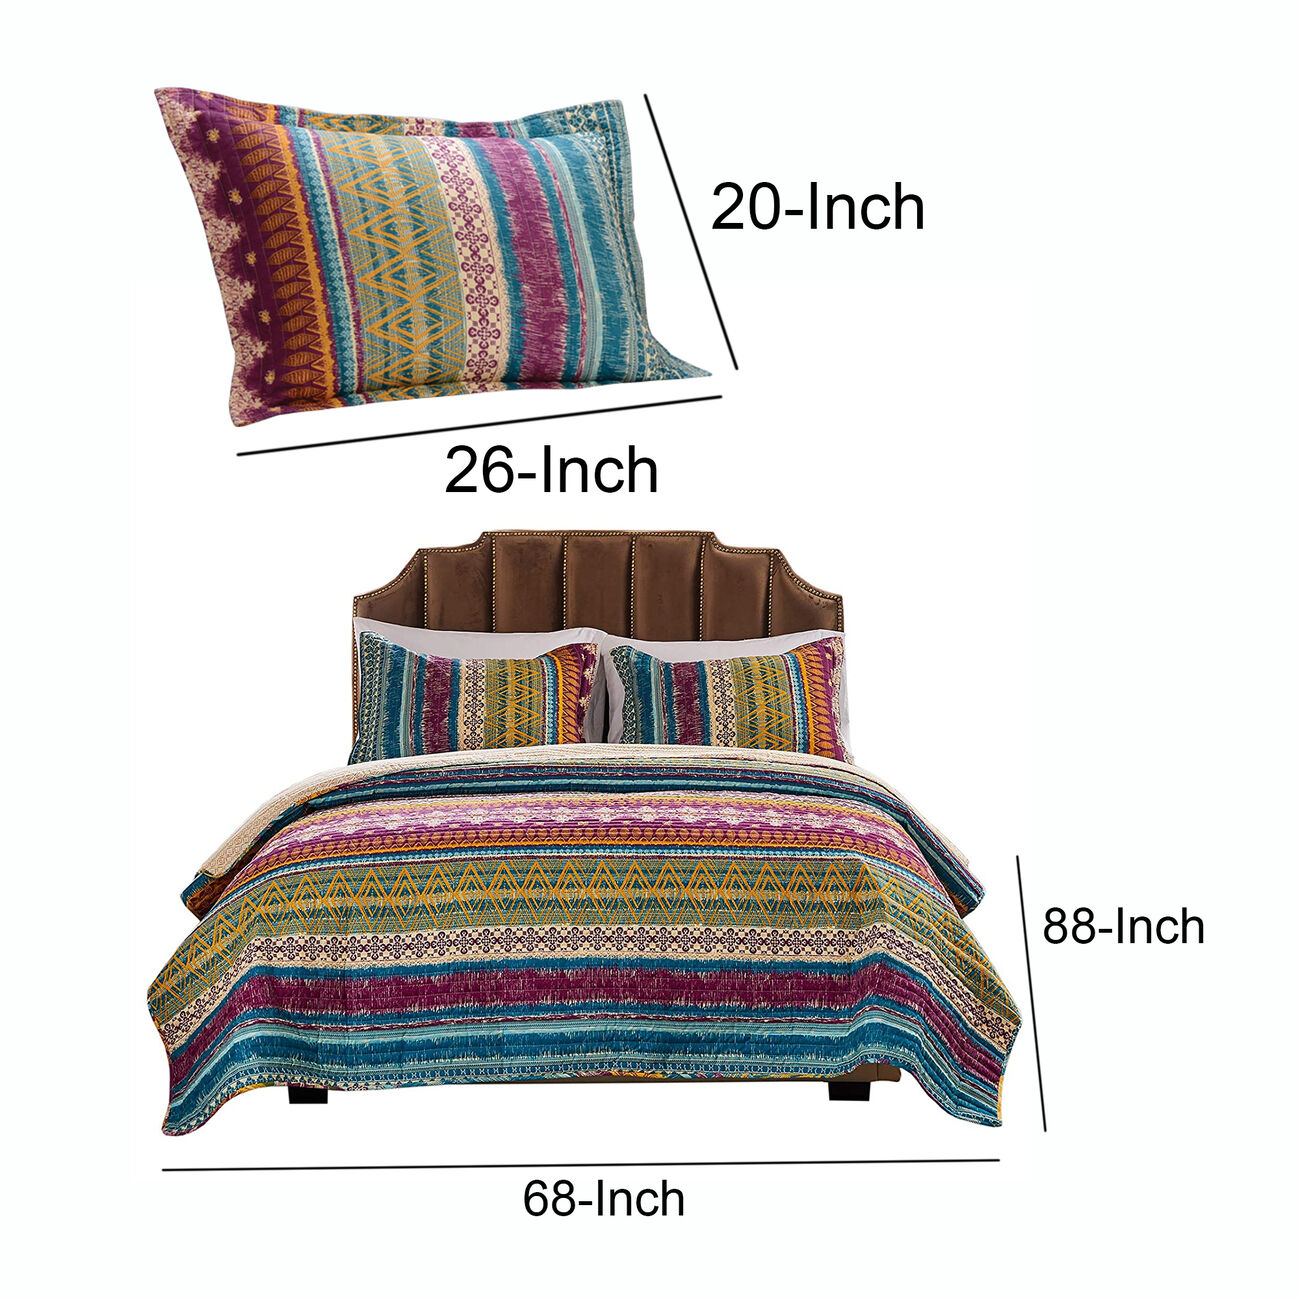 Tribal Motif Print Cotton Twin Quilt Set with 1 Pillow Sham, Multicolor